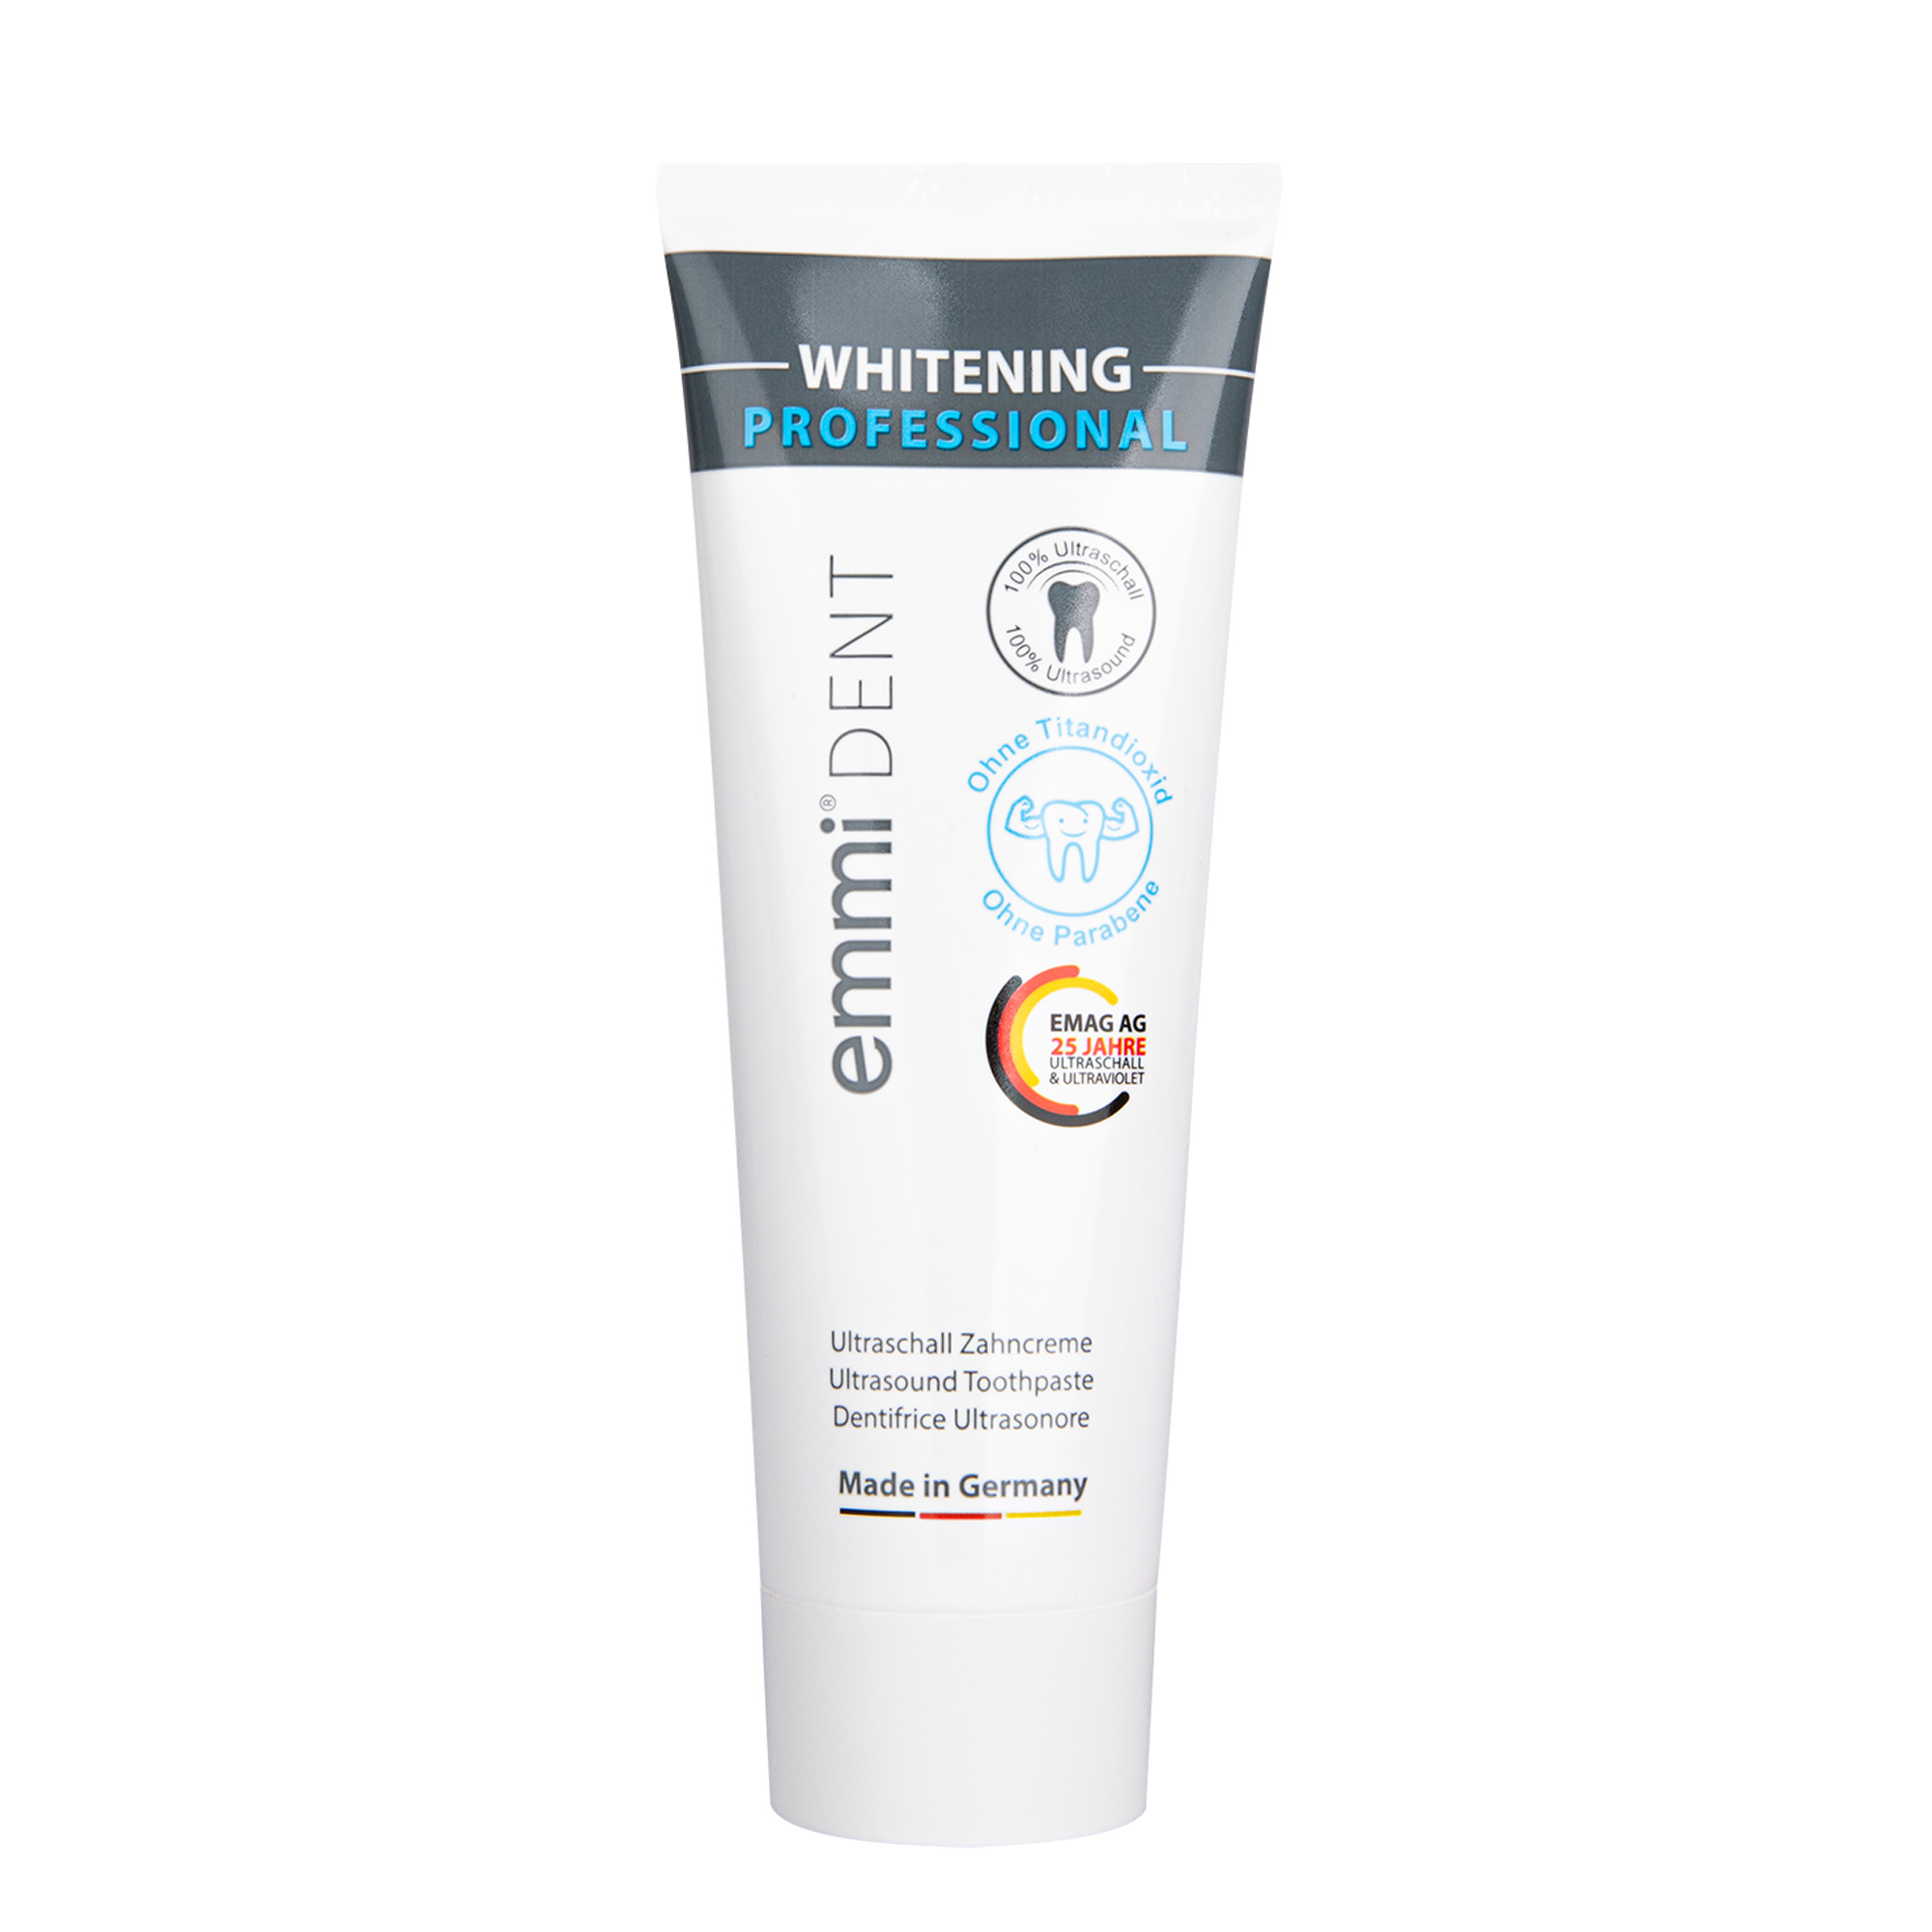 Whitening toothpaste without titanium dioxide